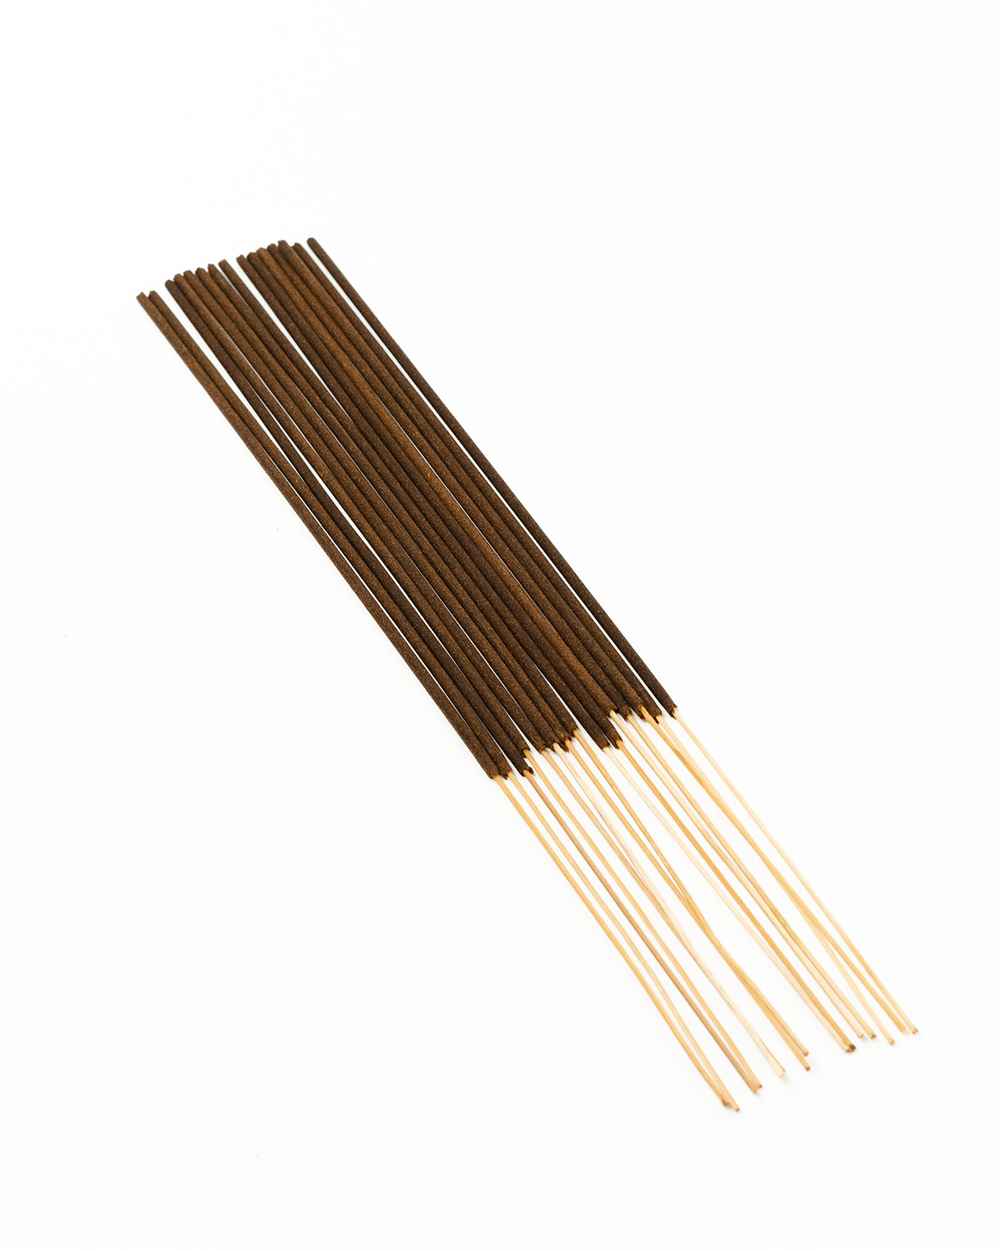 CANYON Incense Sticks - 15 Sticks